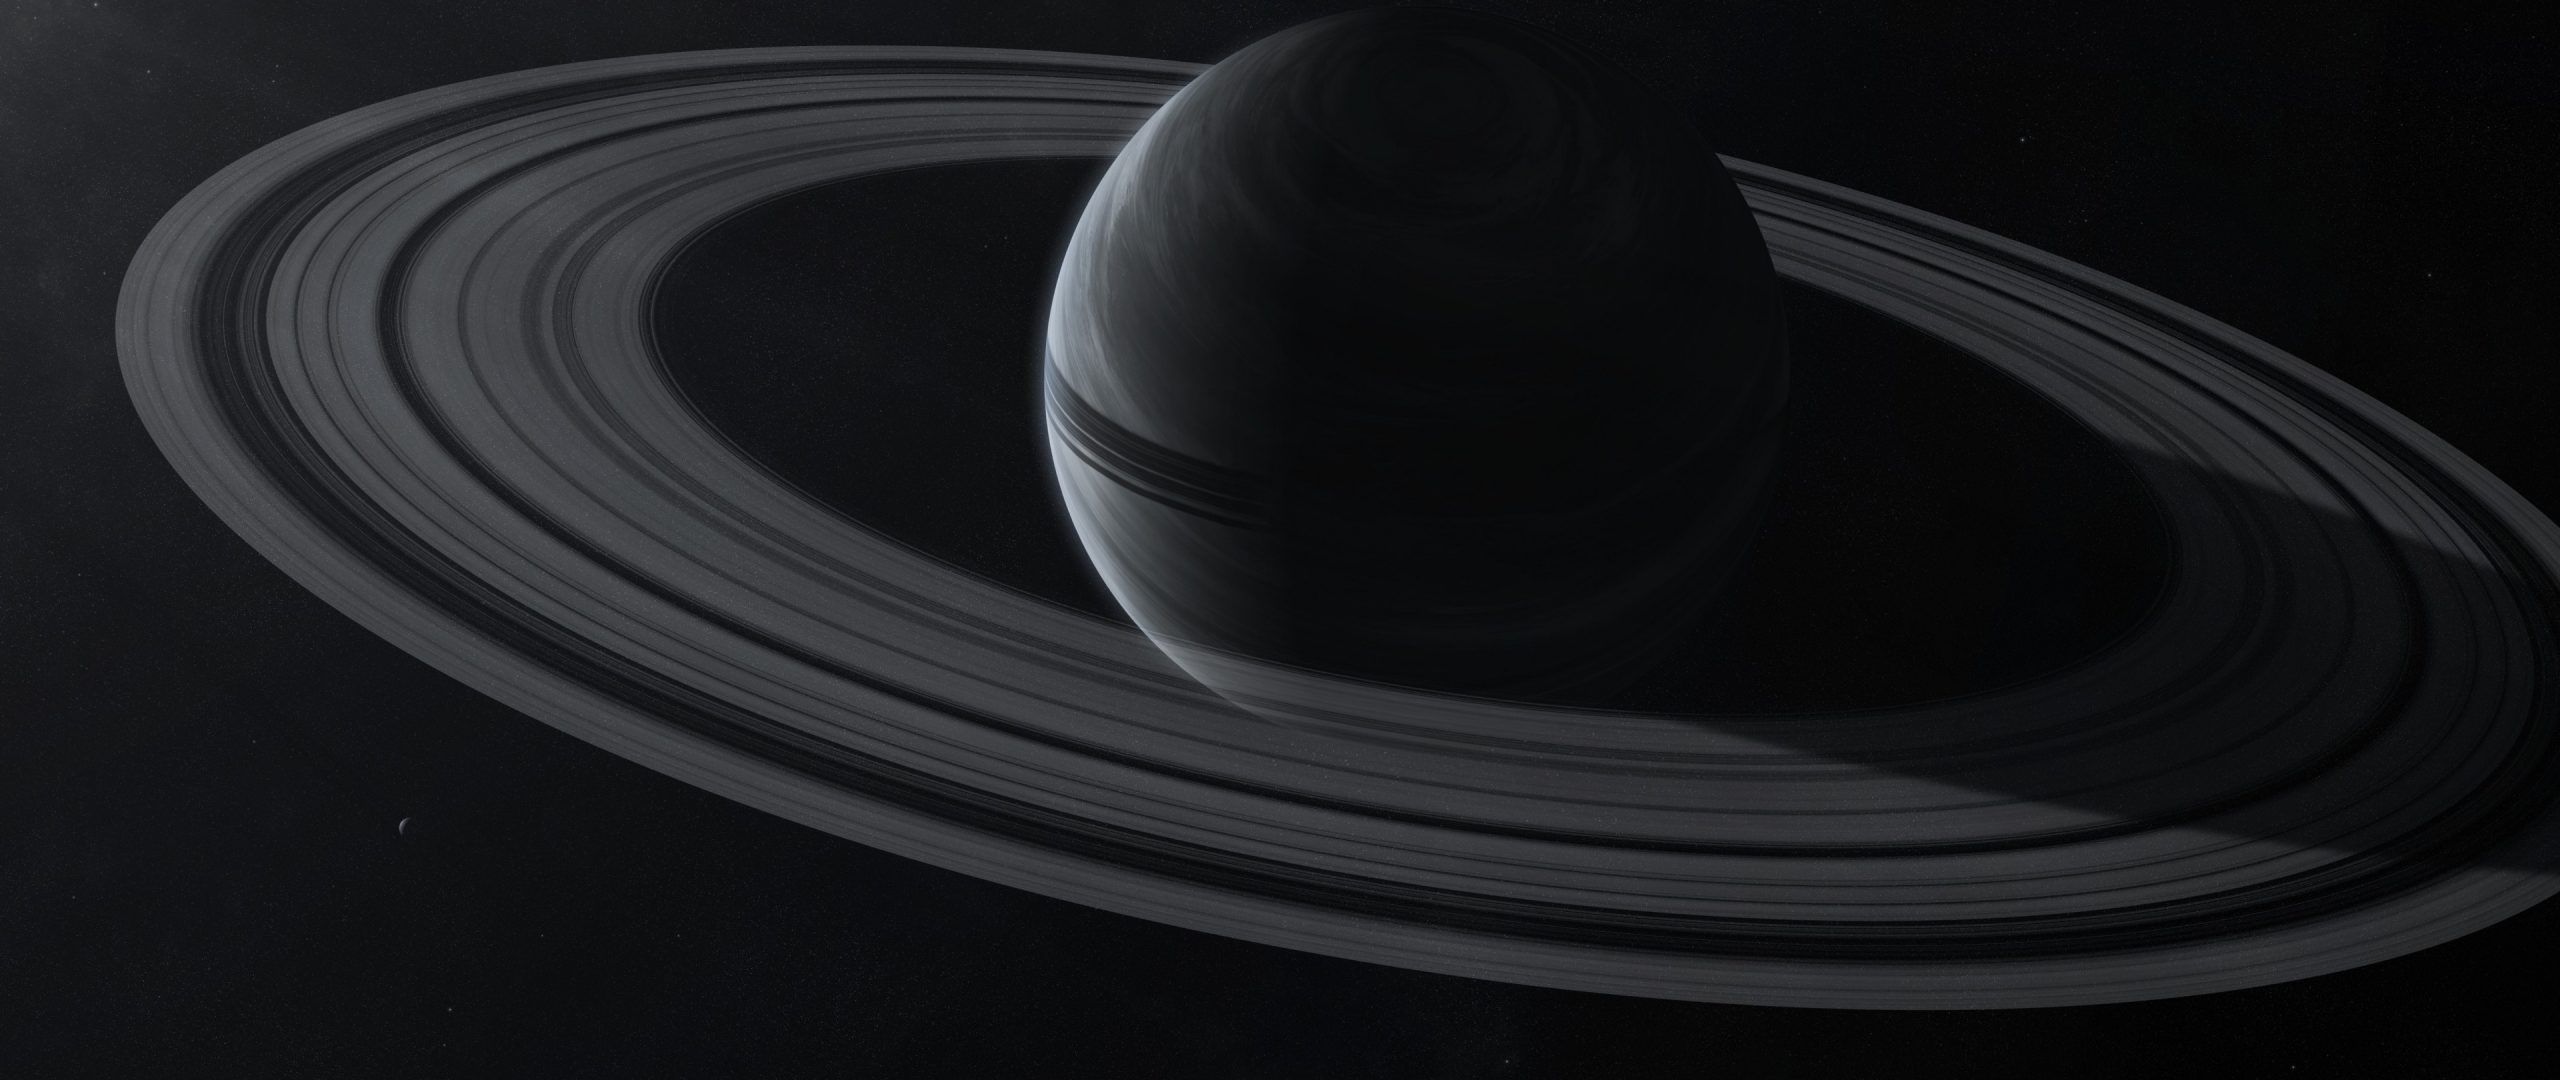 Saturn Planet Monochrome Space 4K Wallpaper